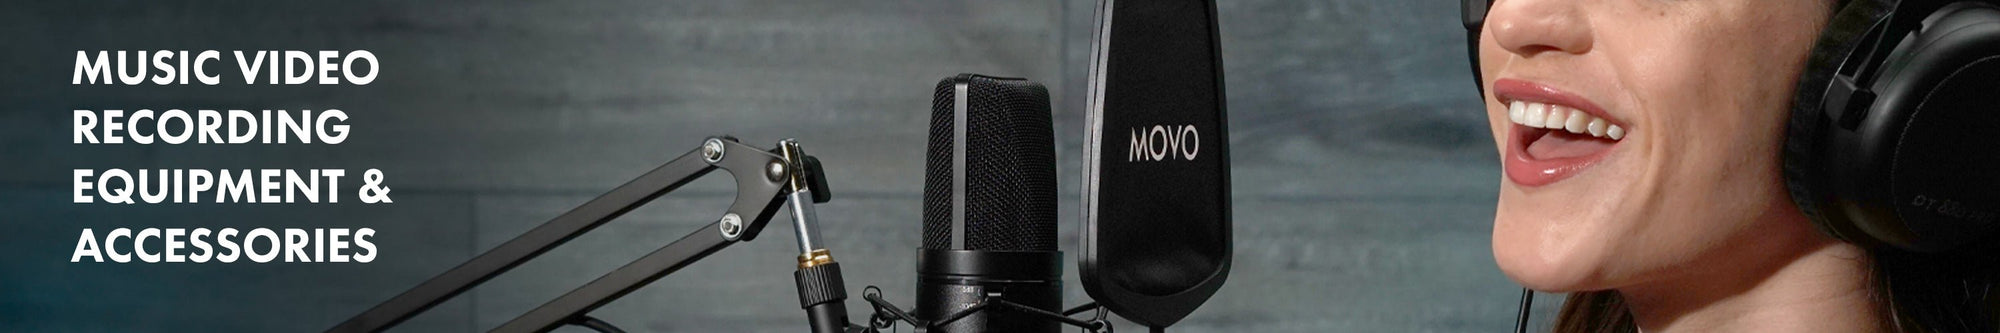 Music Video Recording Equipment & Accessories - Movo